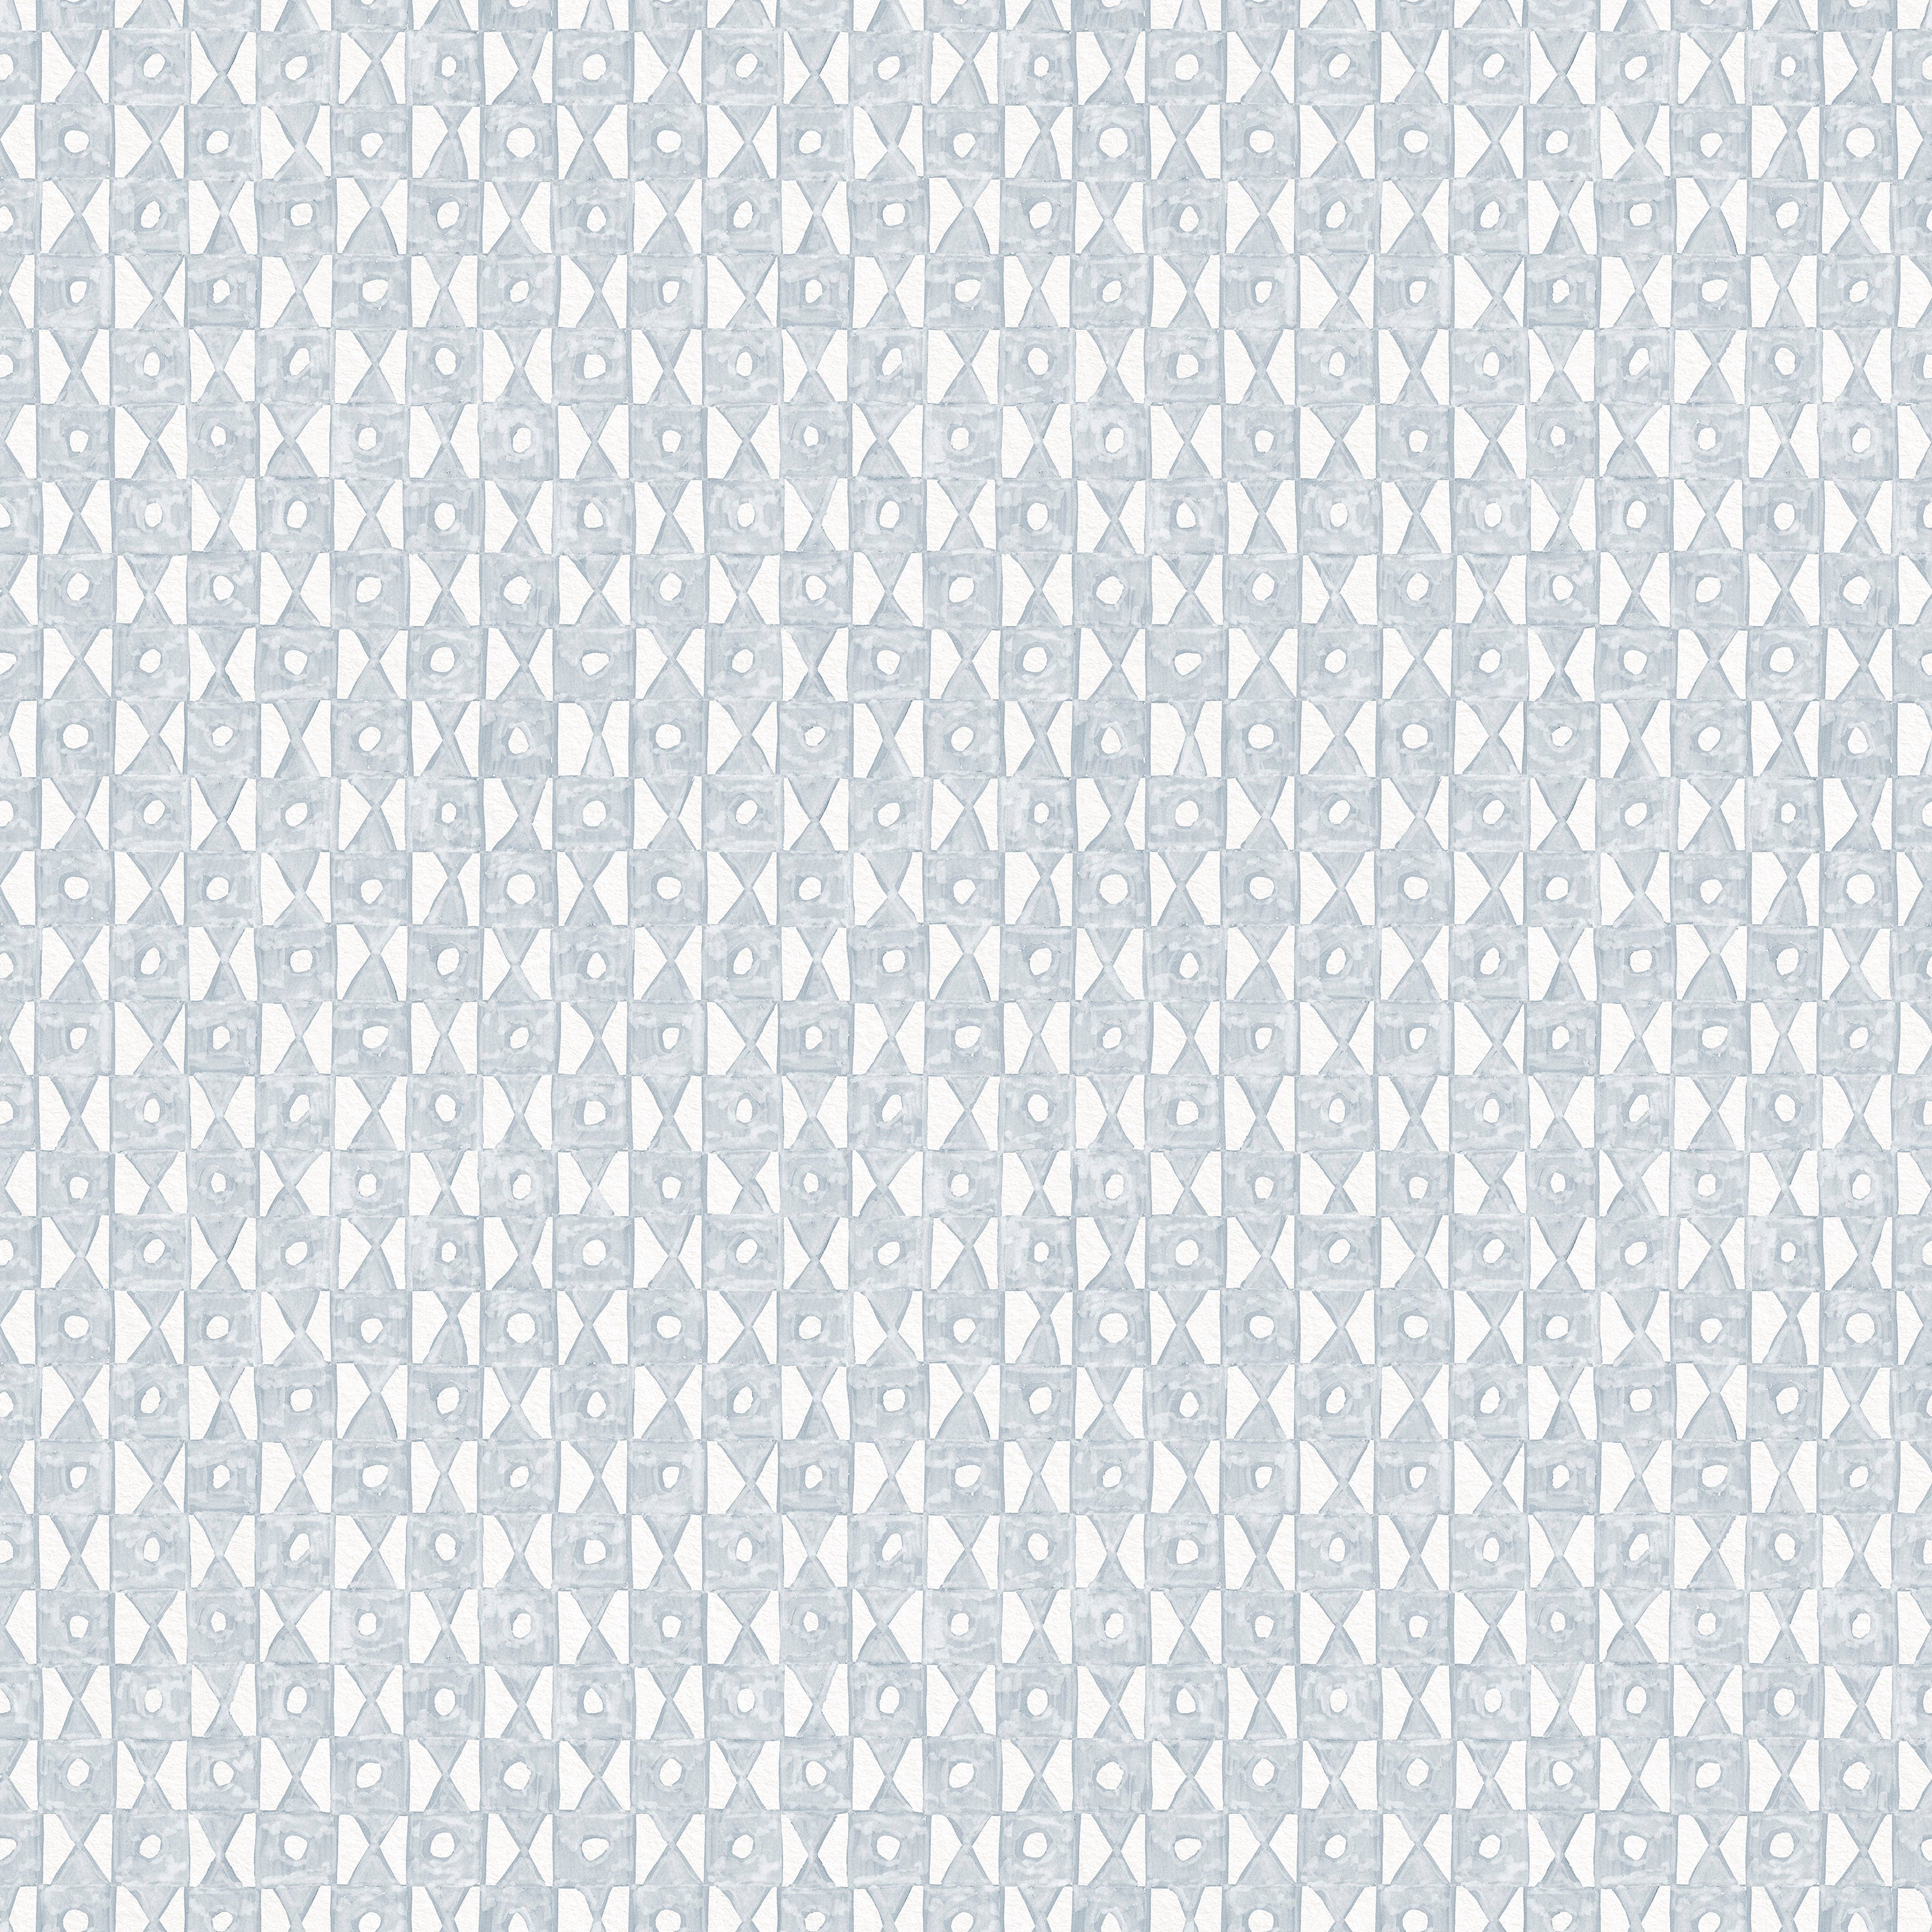 Detail of wallpaper in a geometric grid print in light blue on a white field.